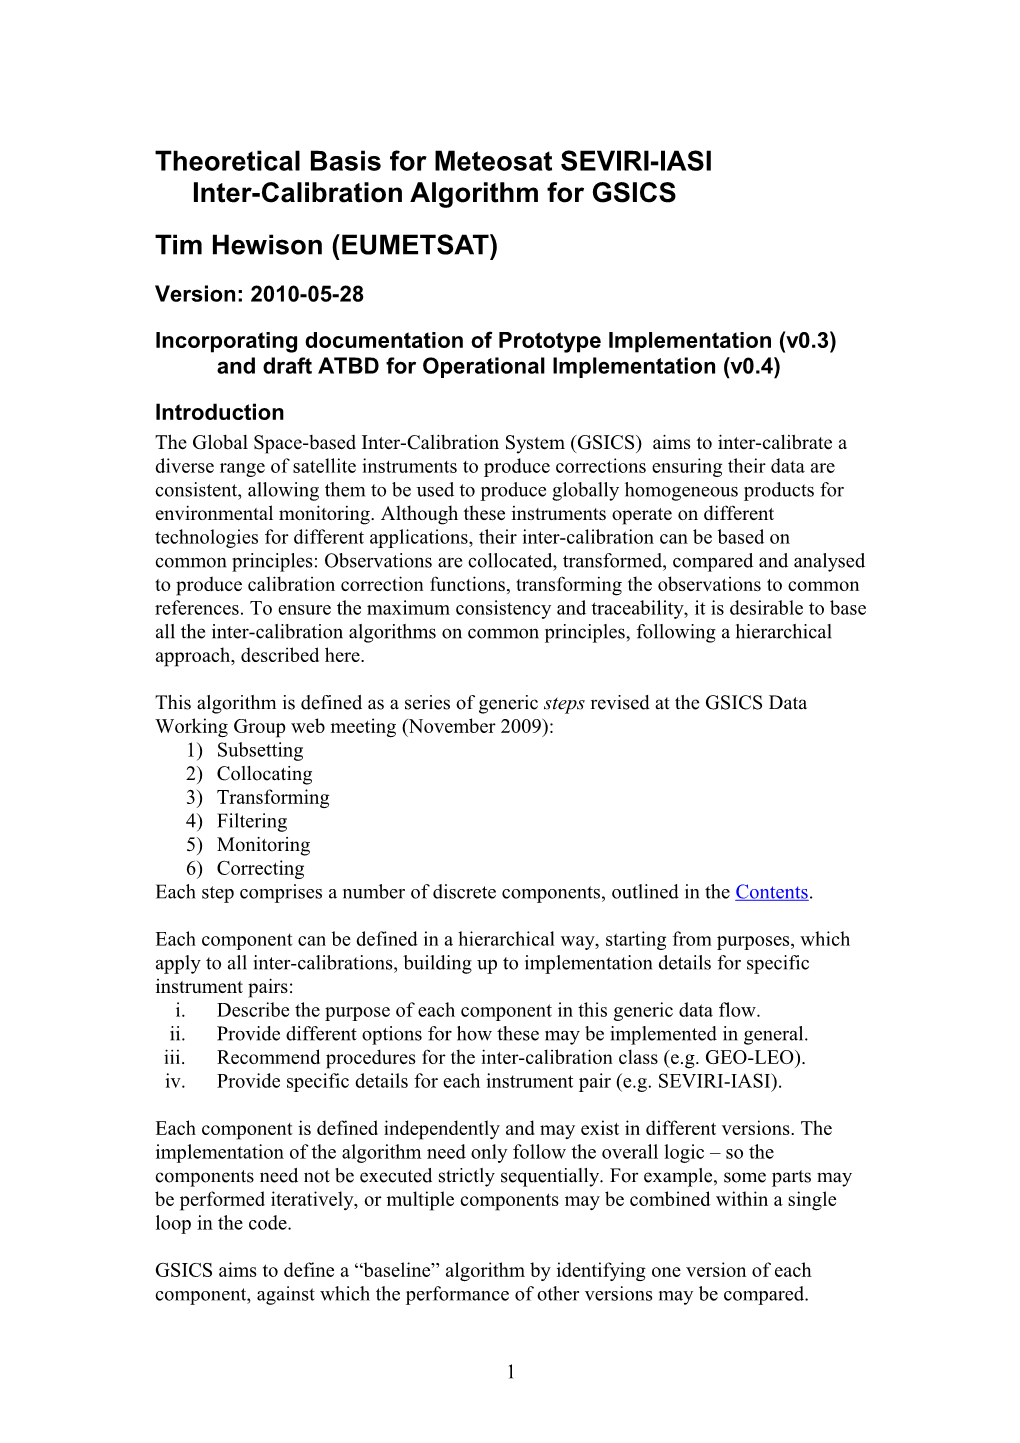 Theoretical Basis for Meteosat SEVIRI-IASI Inter-Calibration Algorithm for GSICS